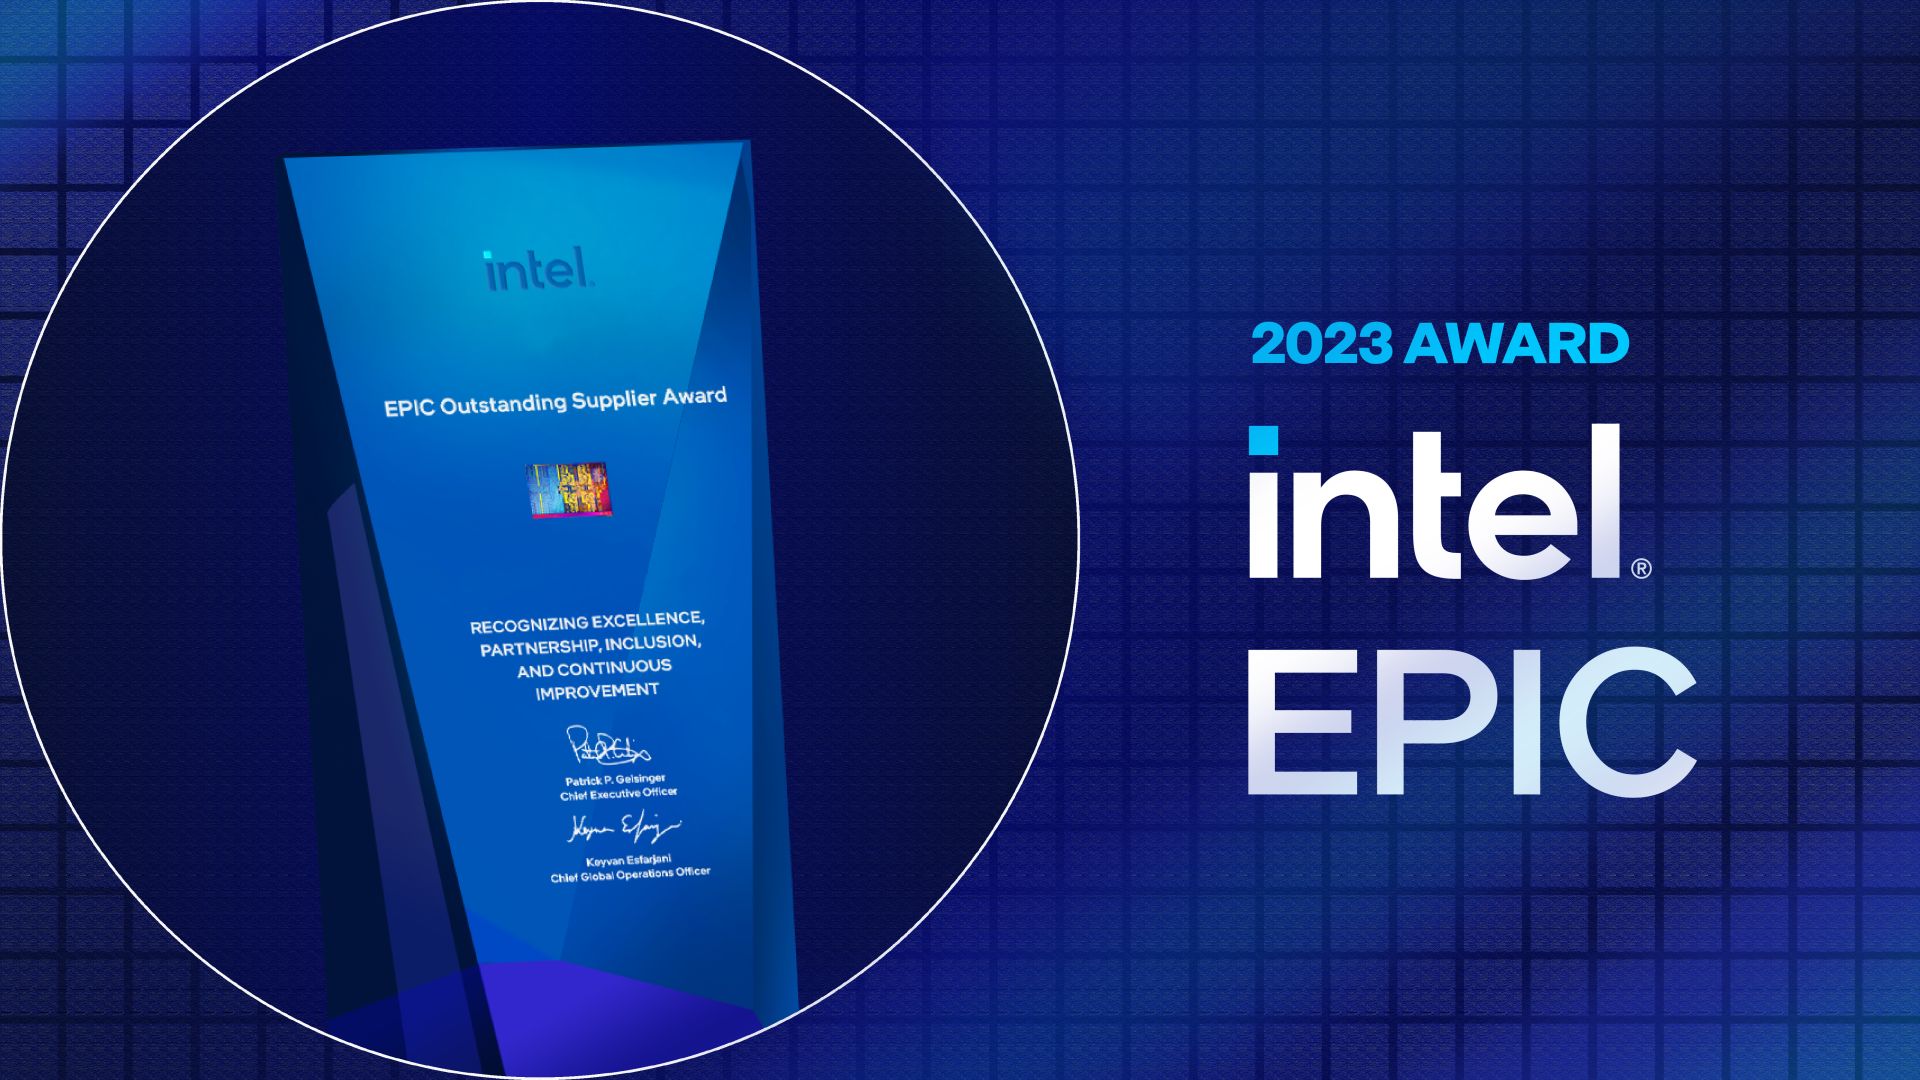 formfactor-earns-intel-s-2023-epic-outstanding-supplier-award